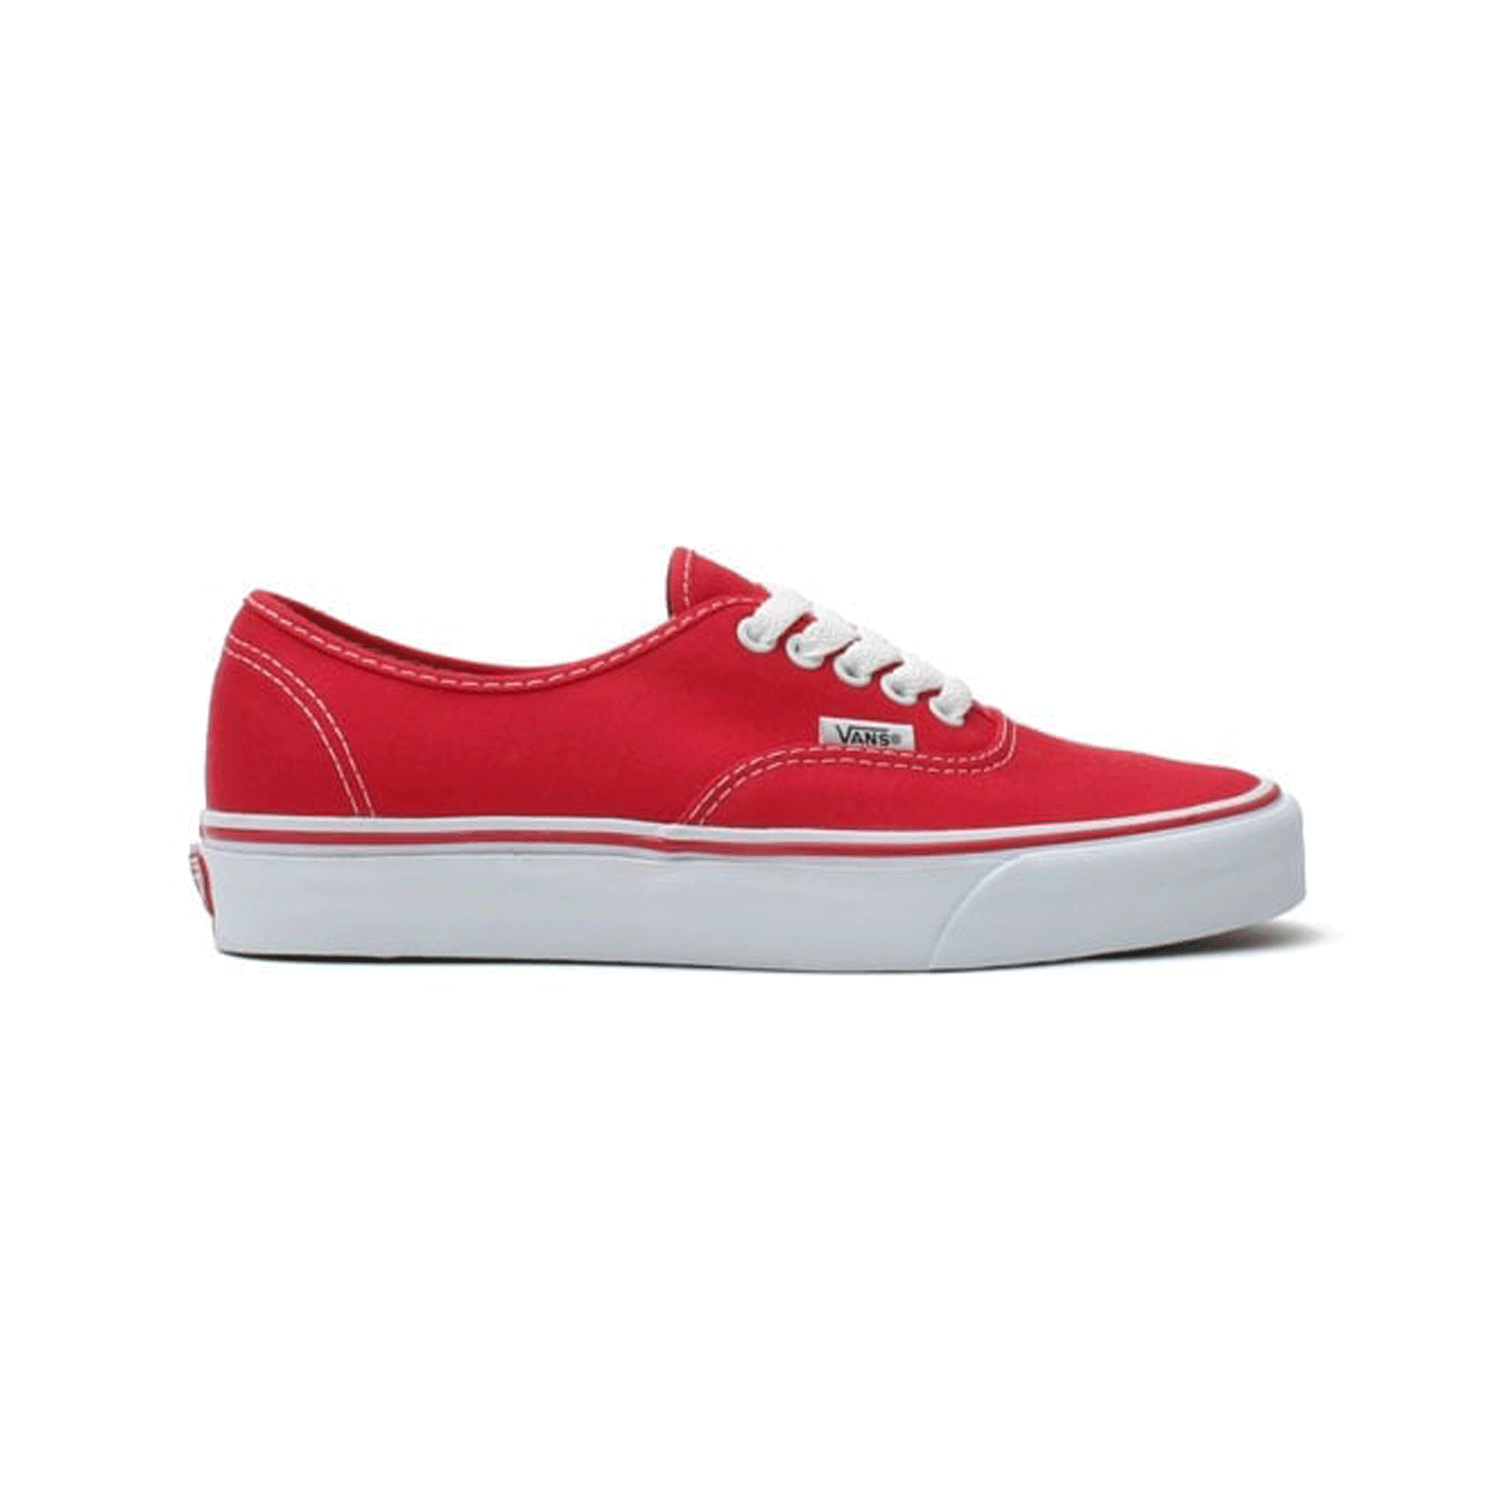 Vans - Kids Authentic Shoes - Red